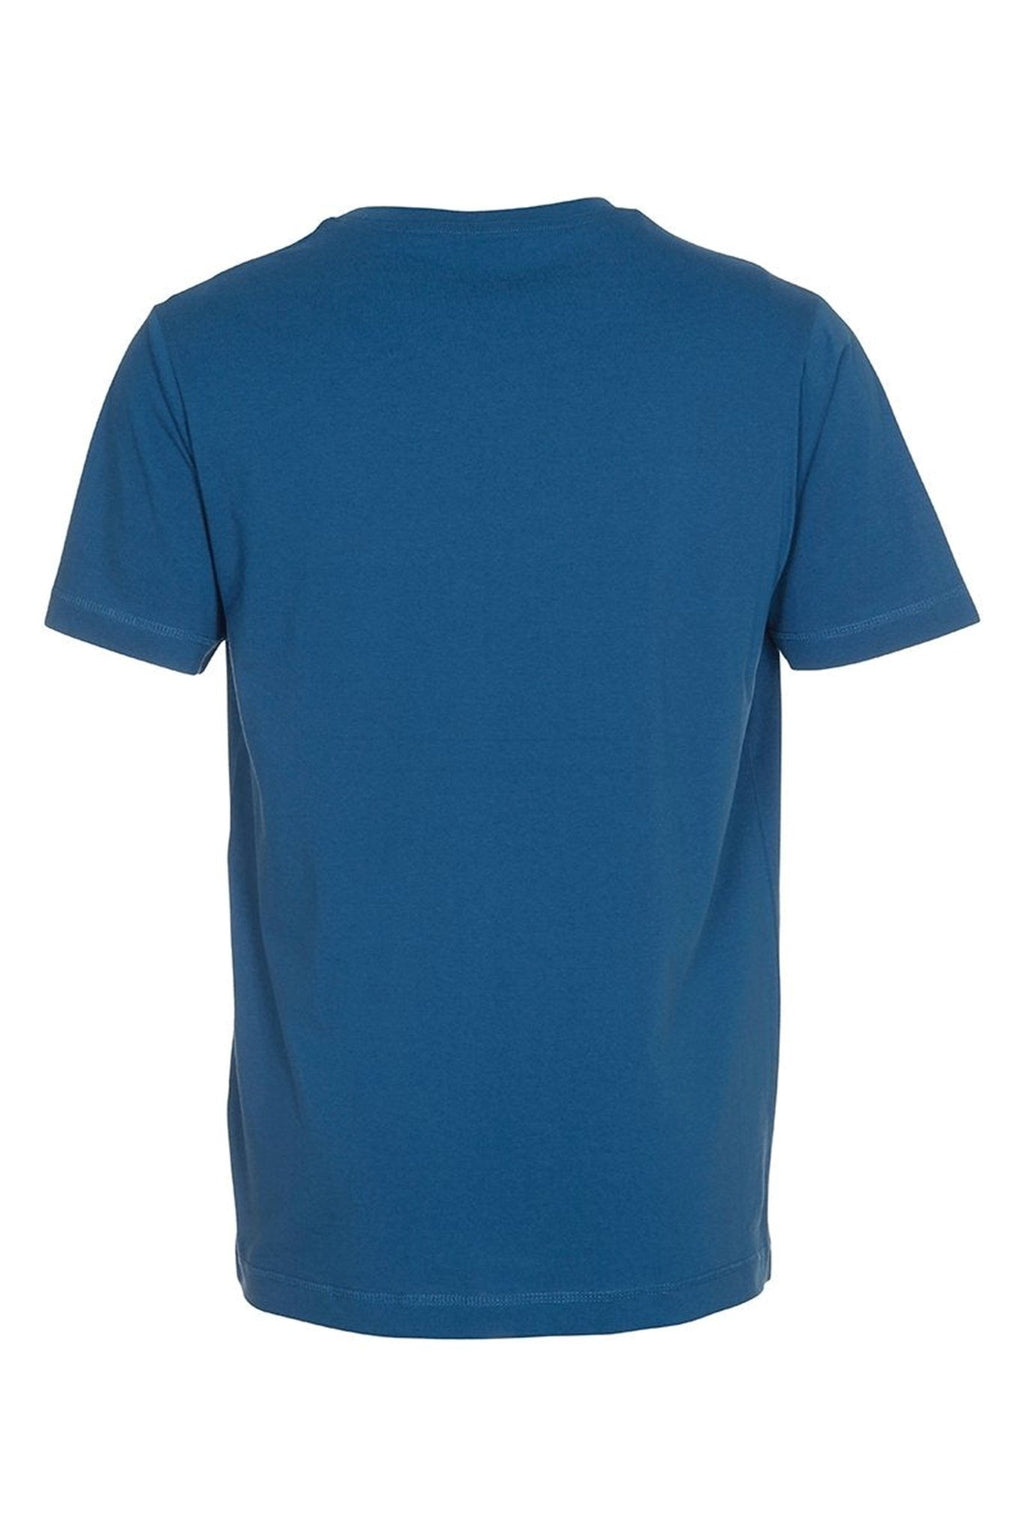 Basic Vneck t-shirt - Petroleum Blå